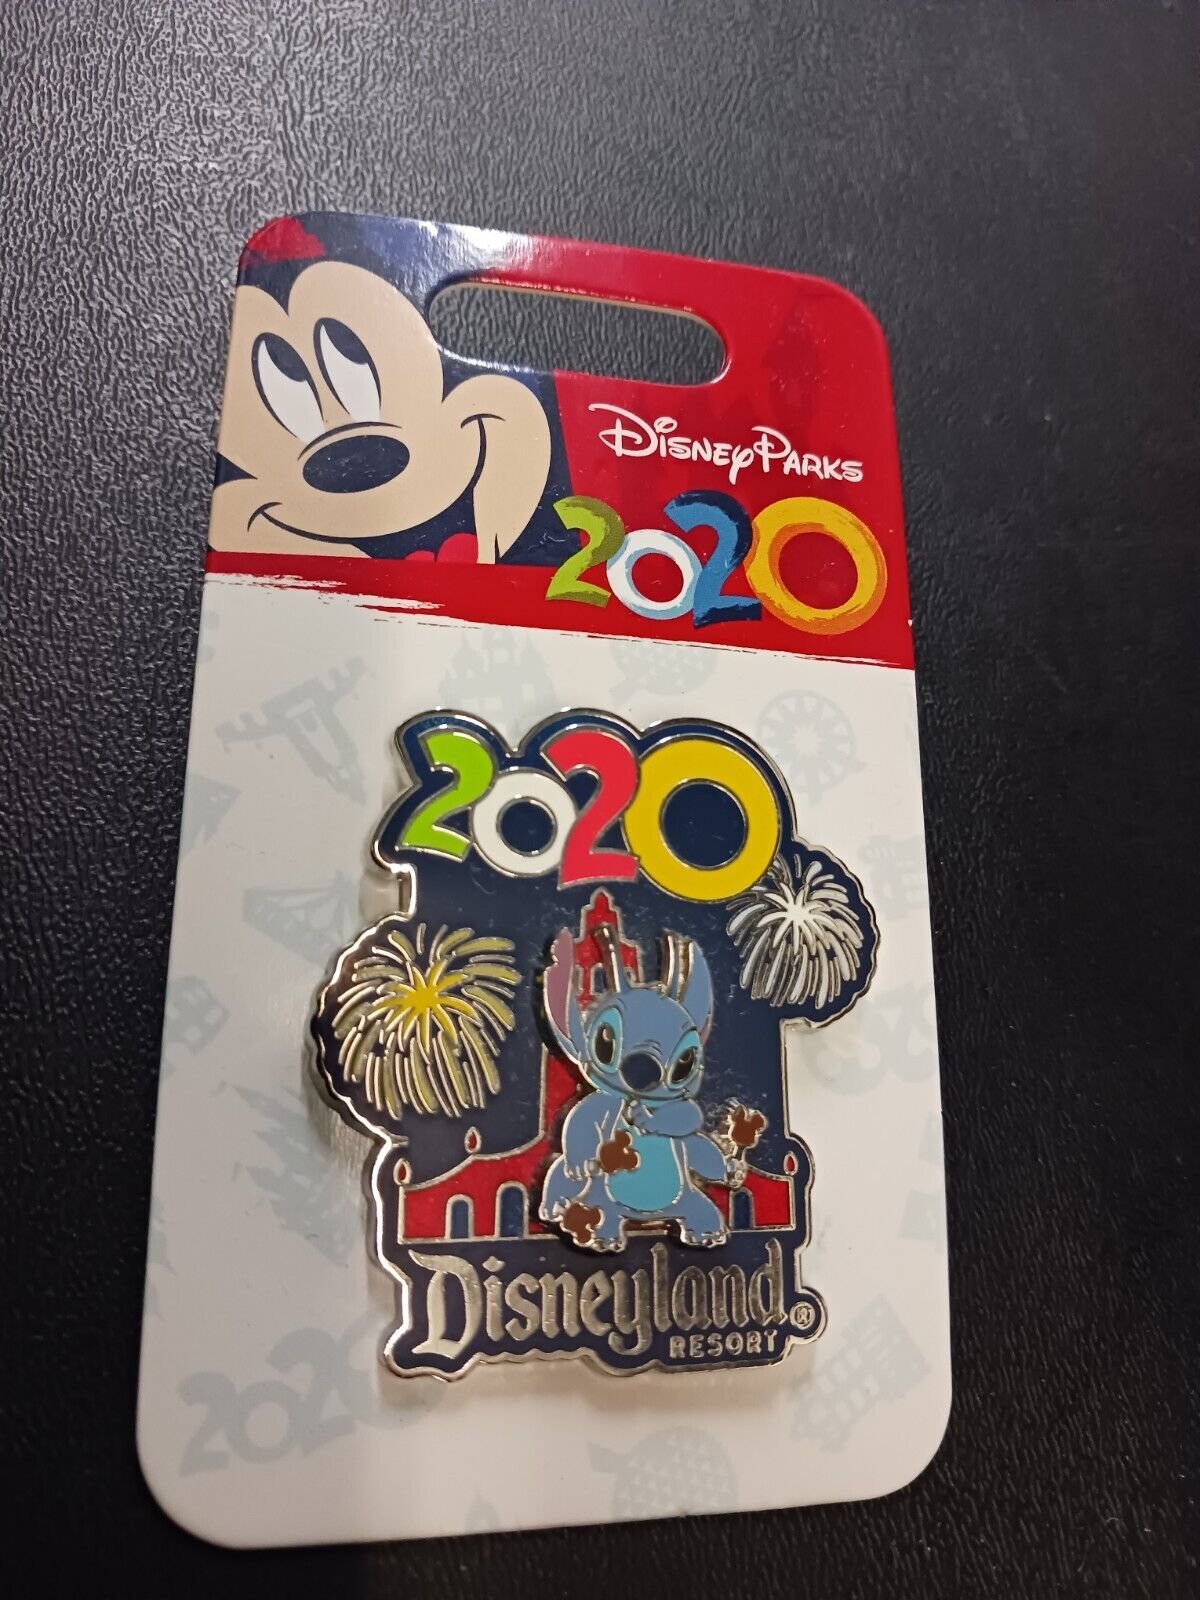 Disney Pin Rare 2020 Limited Edition